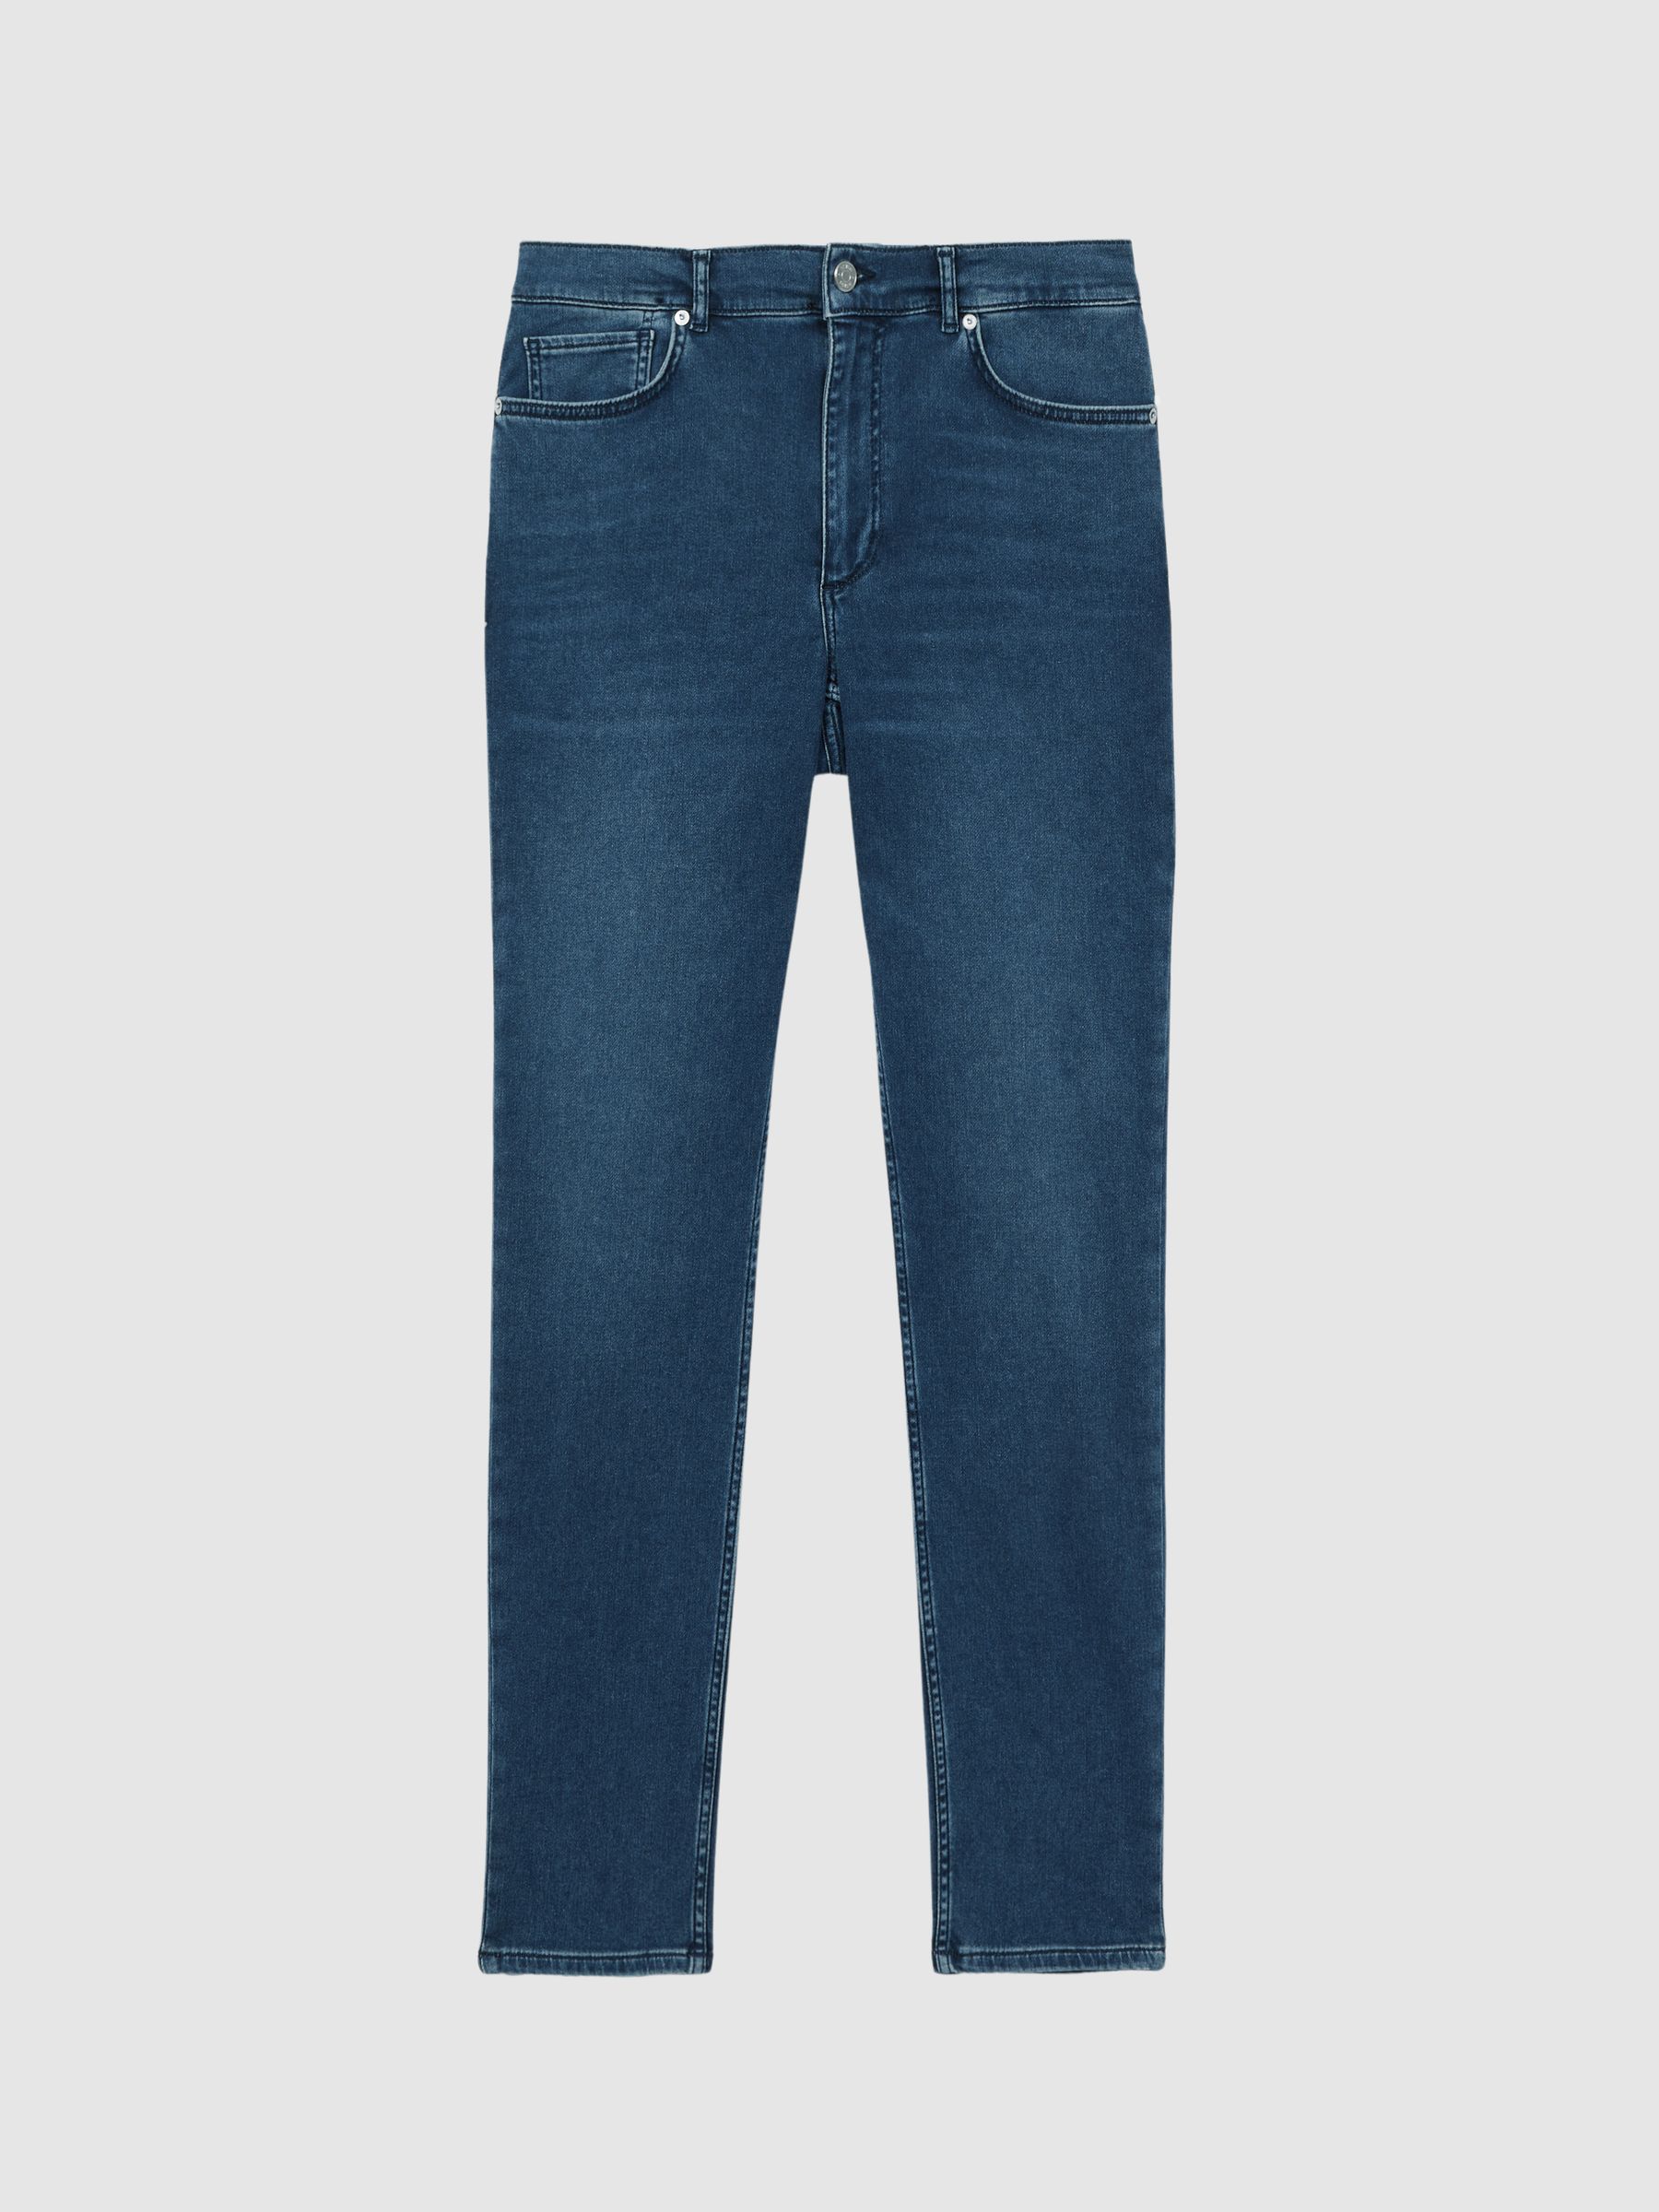 Reiss Ardana Slim Fit Jersey Jeans - REISS